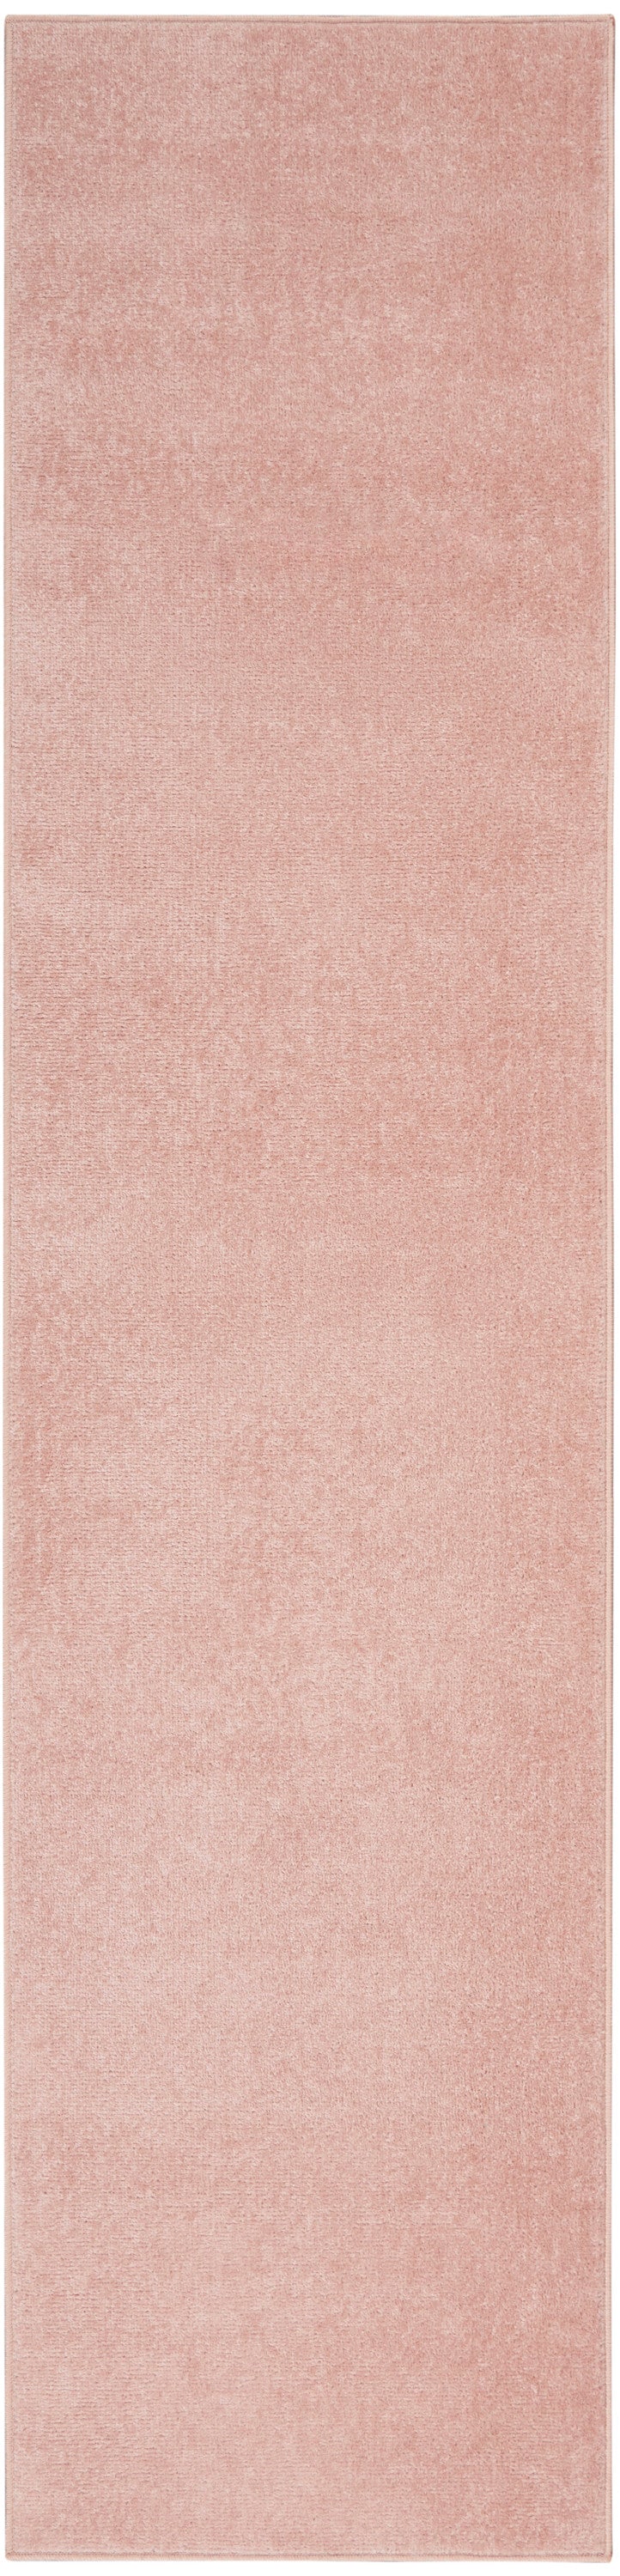 media image for nourison essentials pink rug by nourison 99446824776 redo 3 233